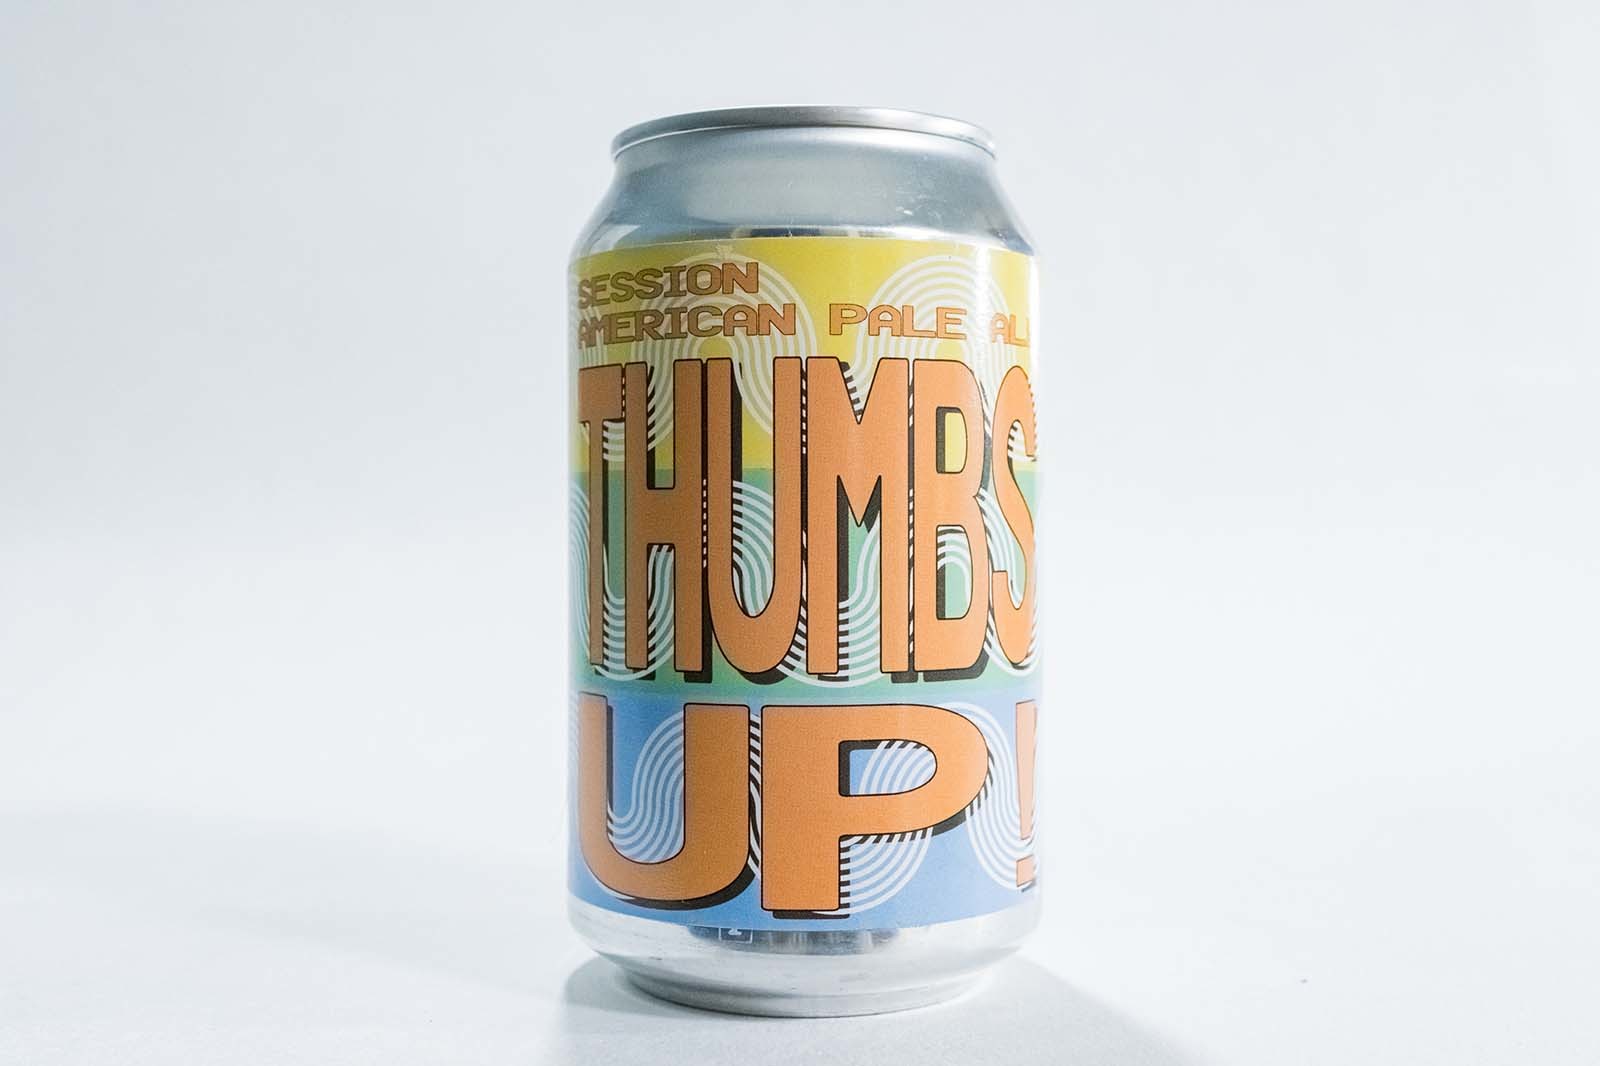 Thumbs Up! van Brewery 22Four